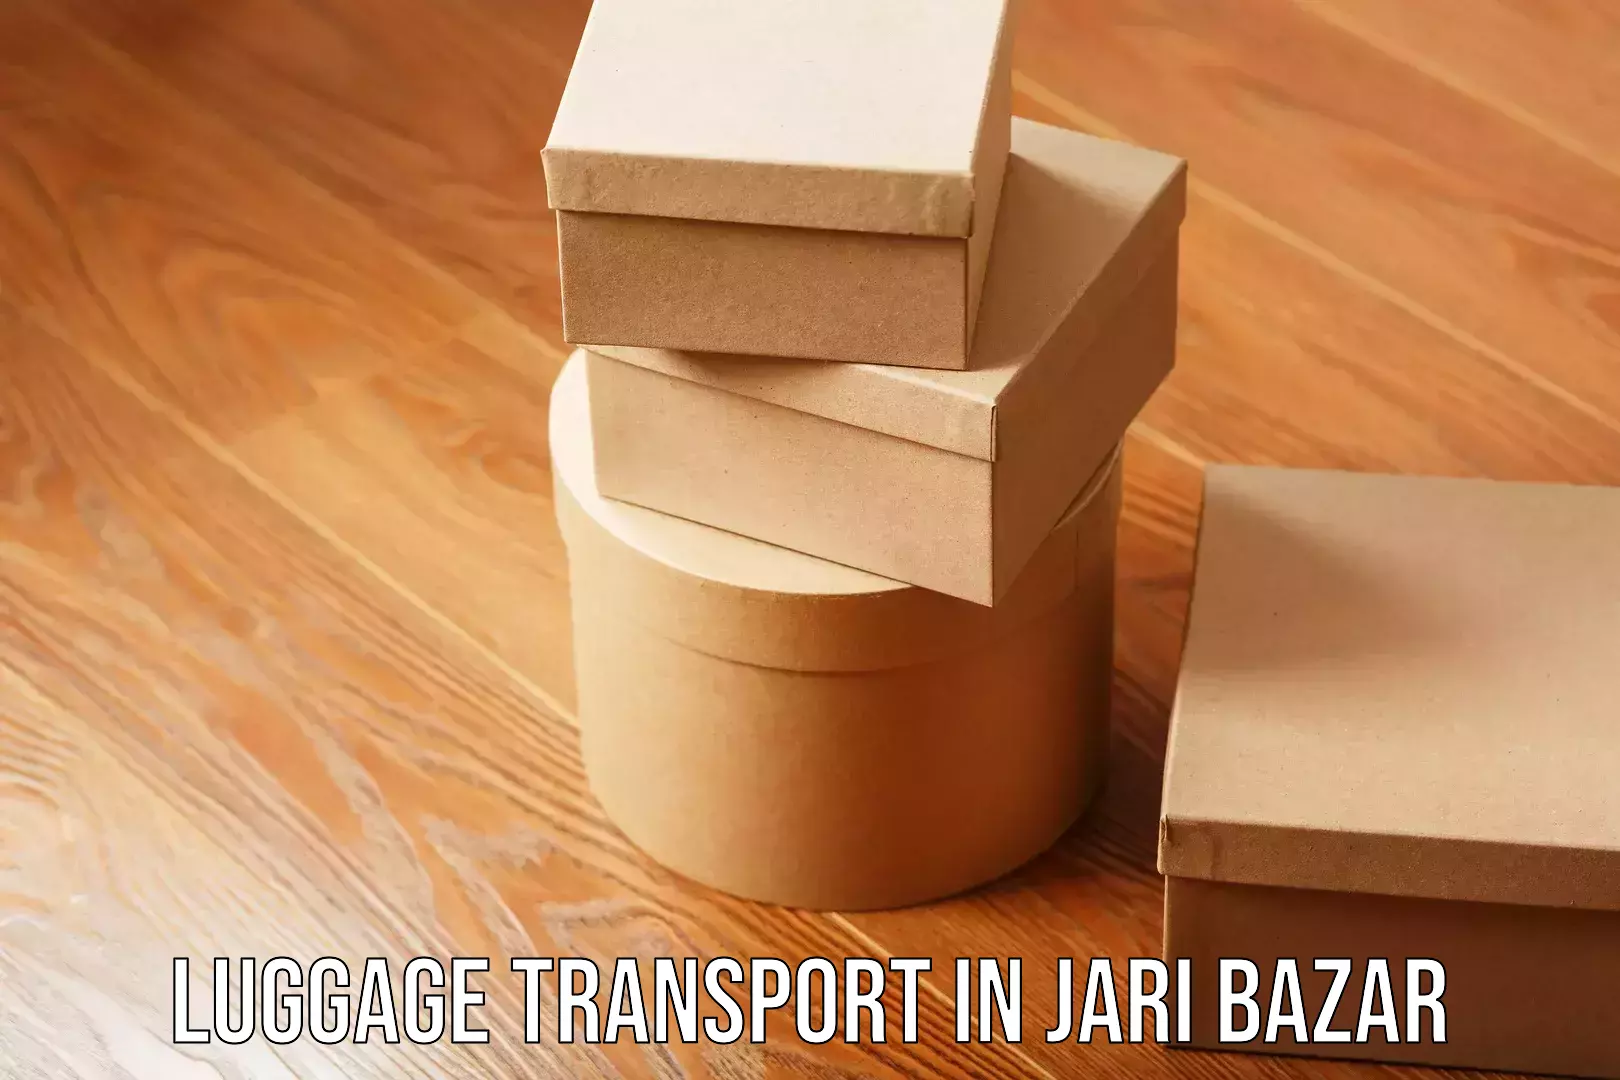 Luggage transport logistics in Jari Bazar